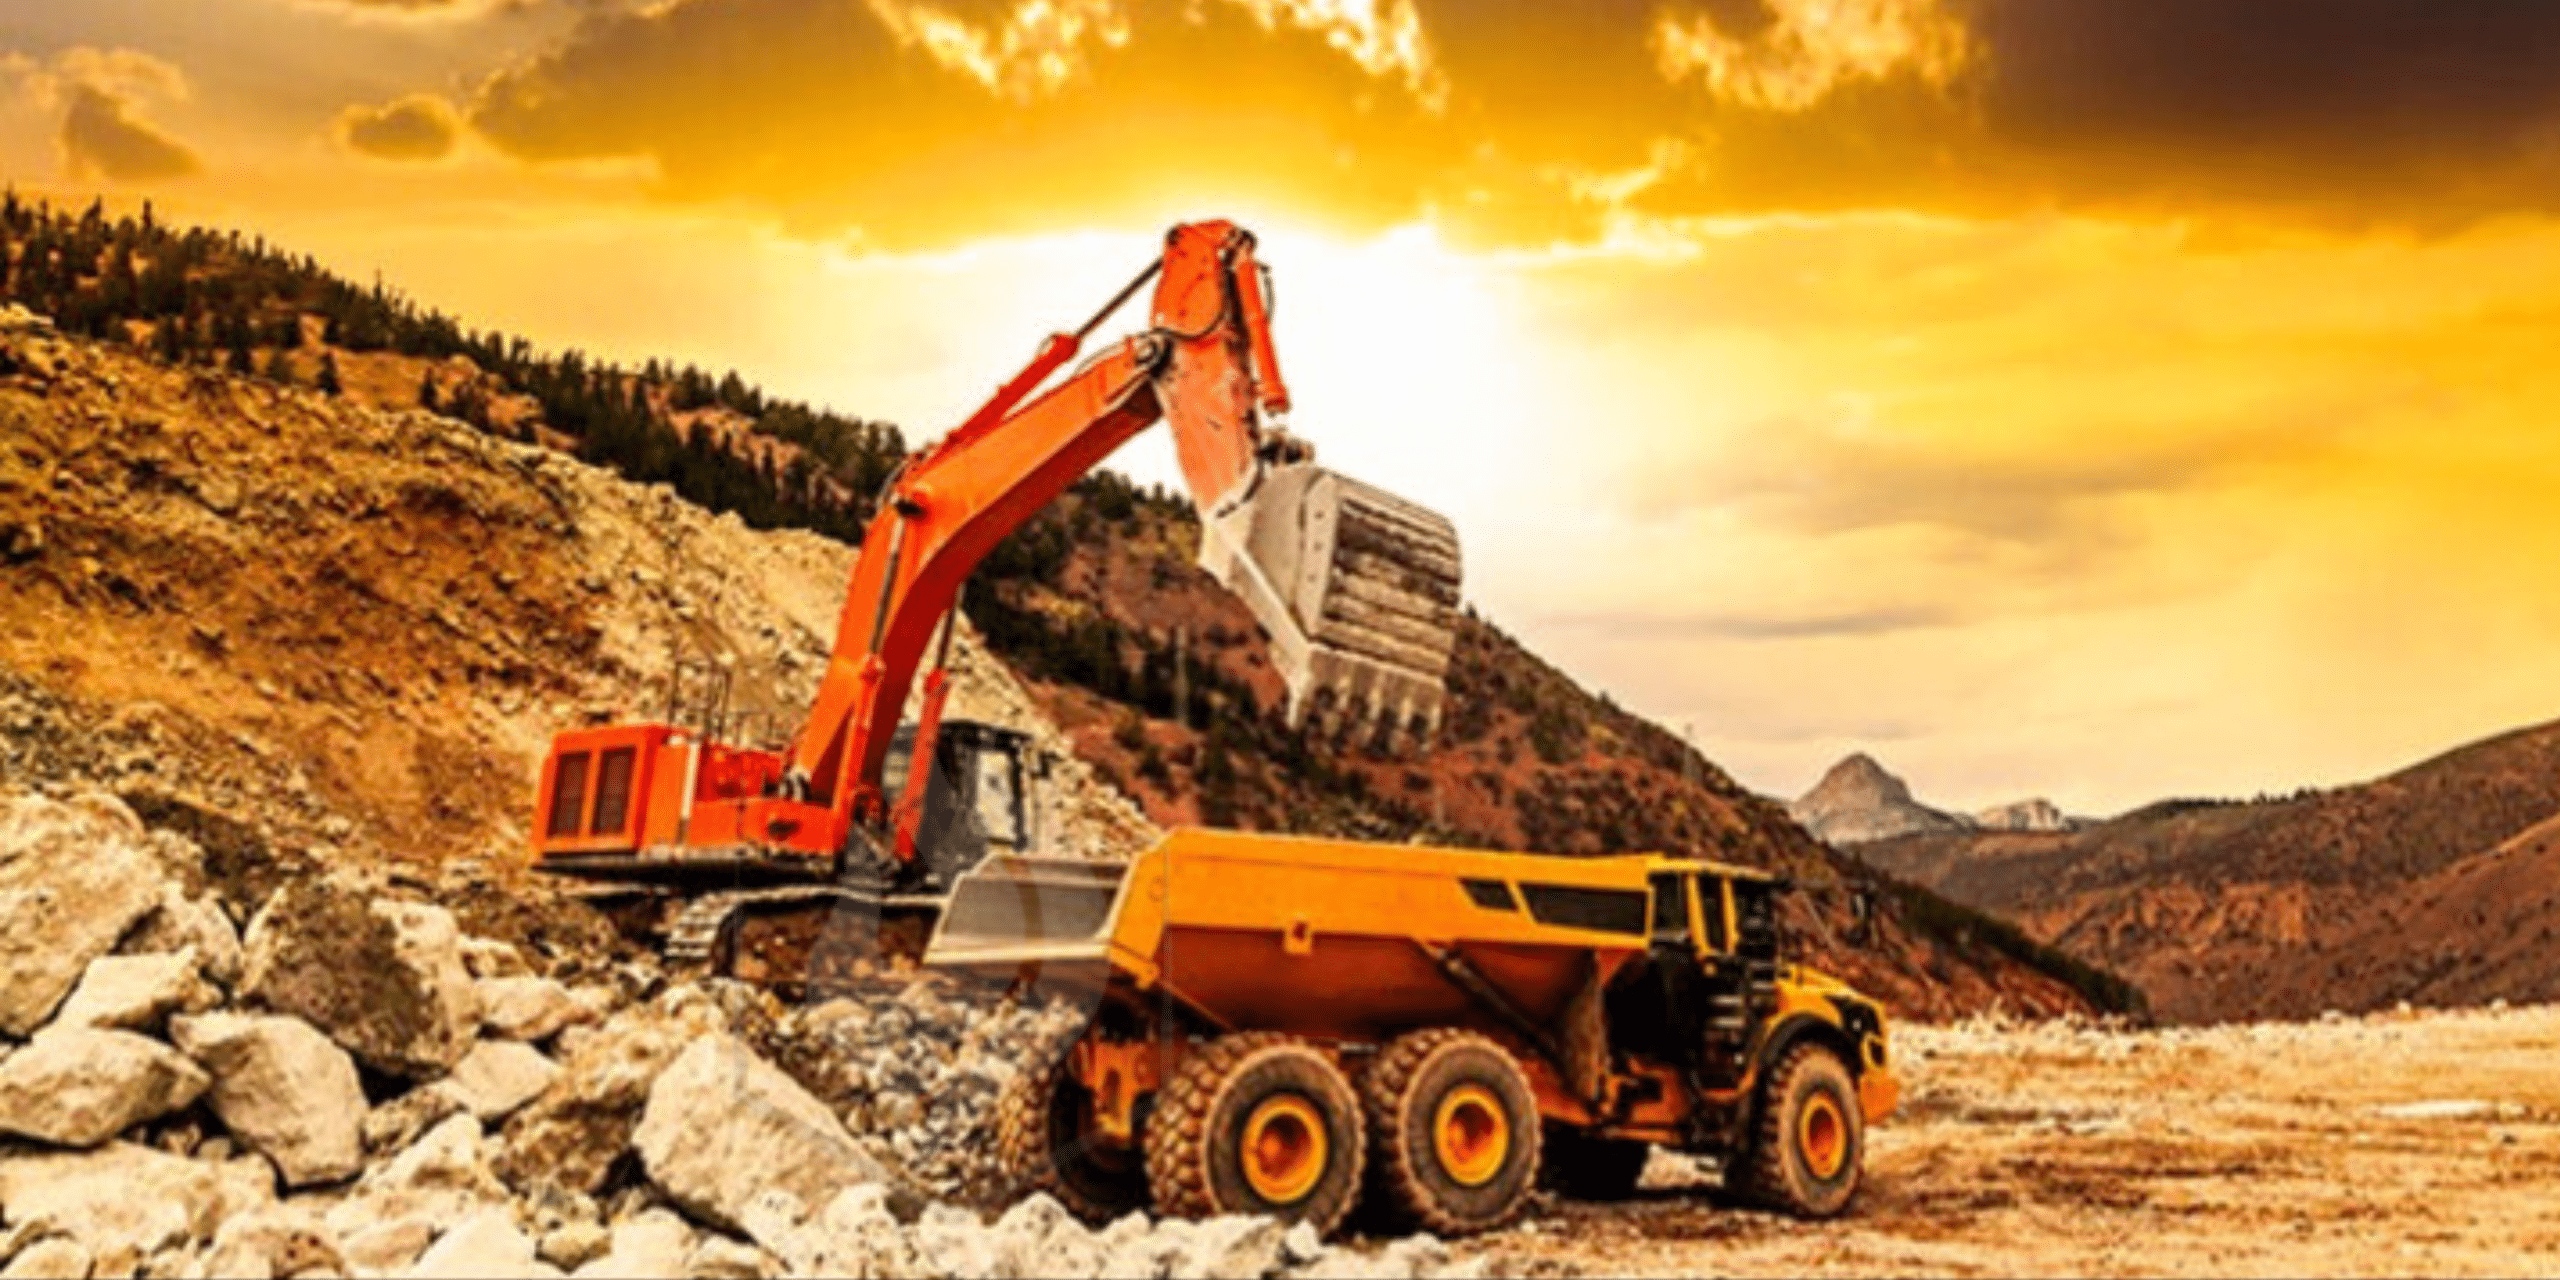 pre-heat treatment solutions mining excavator bucket repair and maintenance easy fast repairs